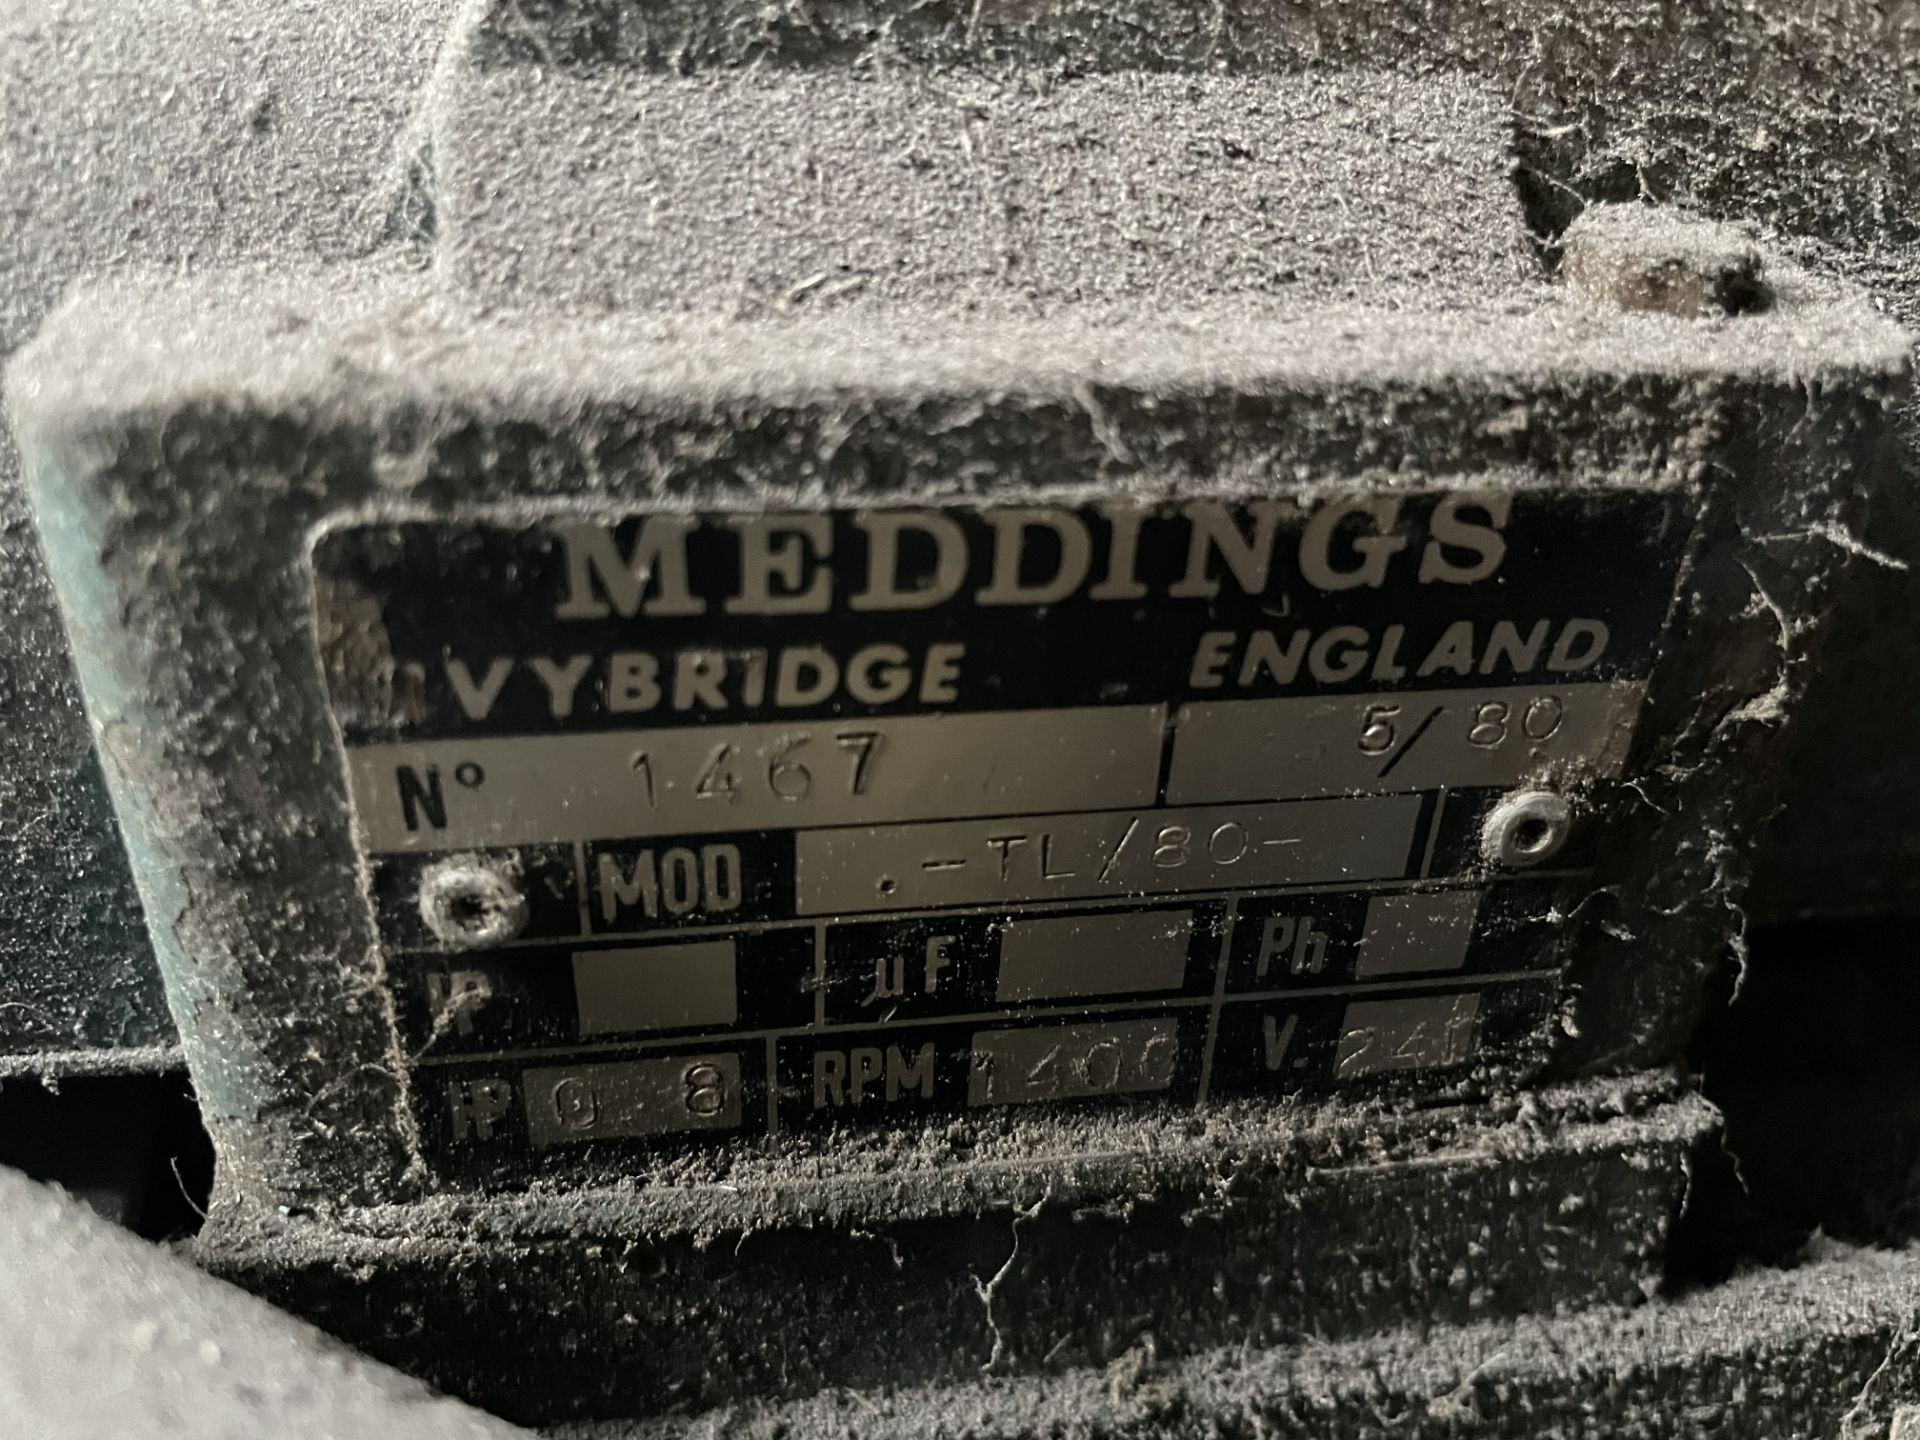 Meddings Cold Saw - No 1467 - Model TL/80 240V - 5/80. - Image 2 of 2